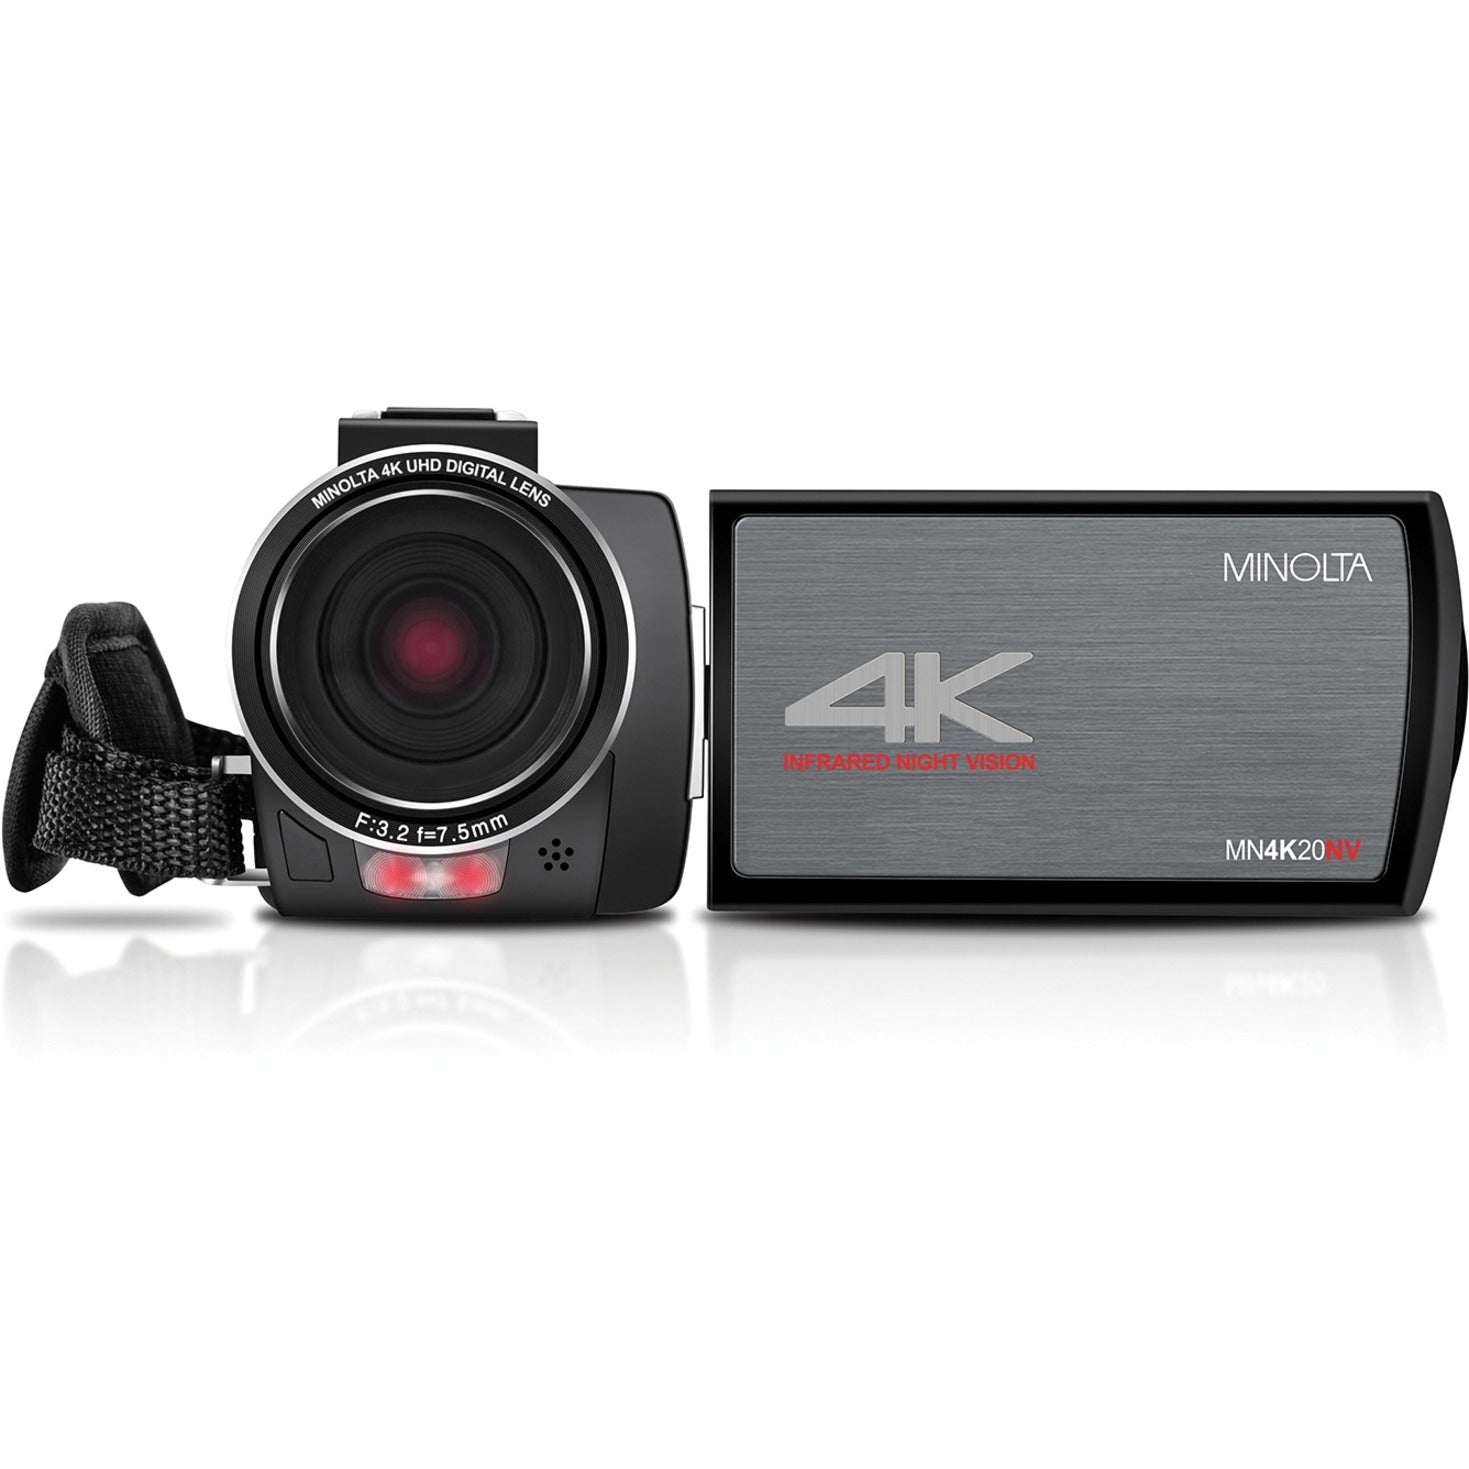 Konica Minolta MN4K20NV Digital Camcorder, 4K Ultra HD IR Night Vision, Optical Image Stabilization